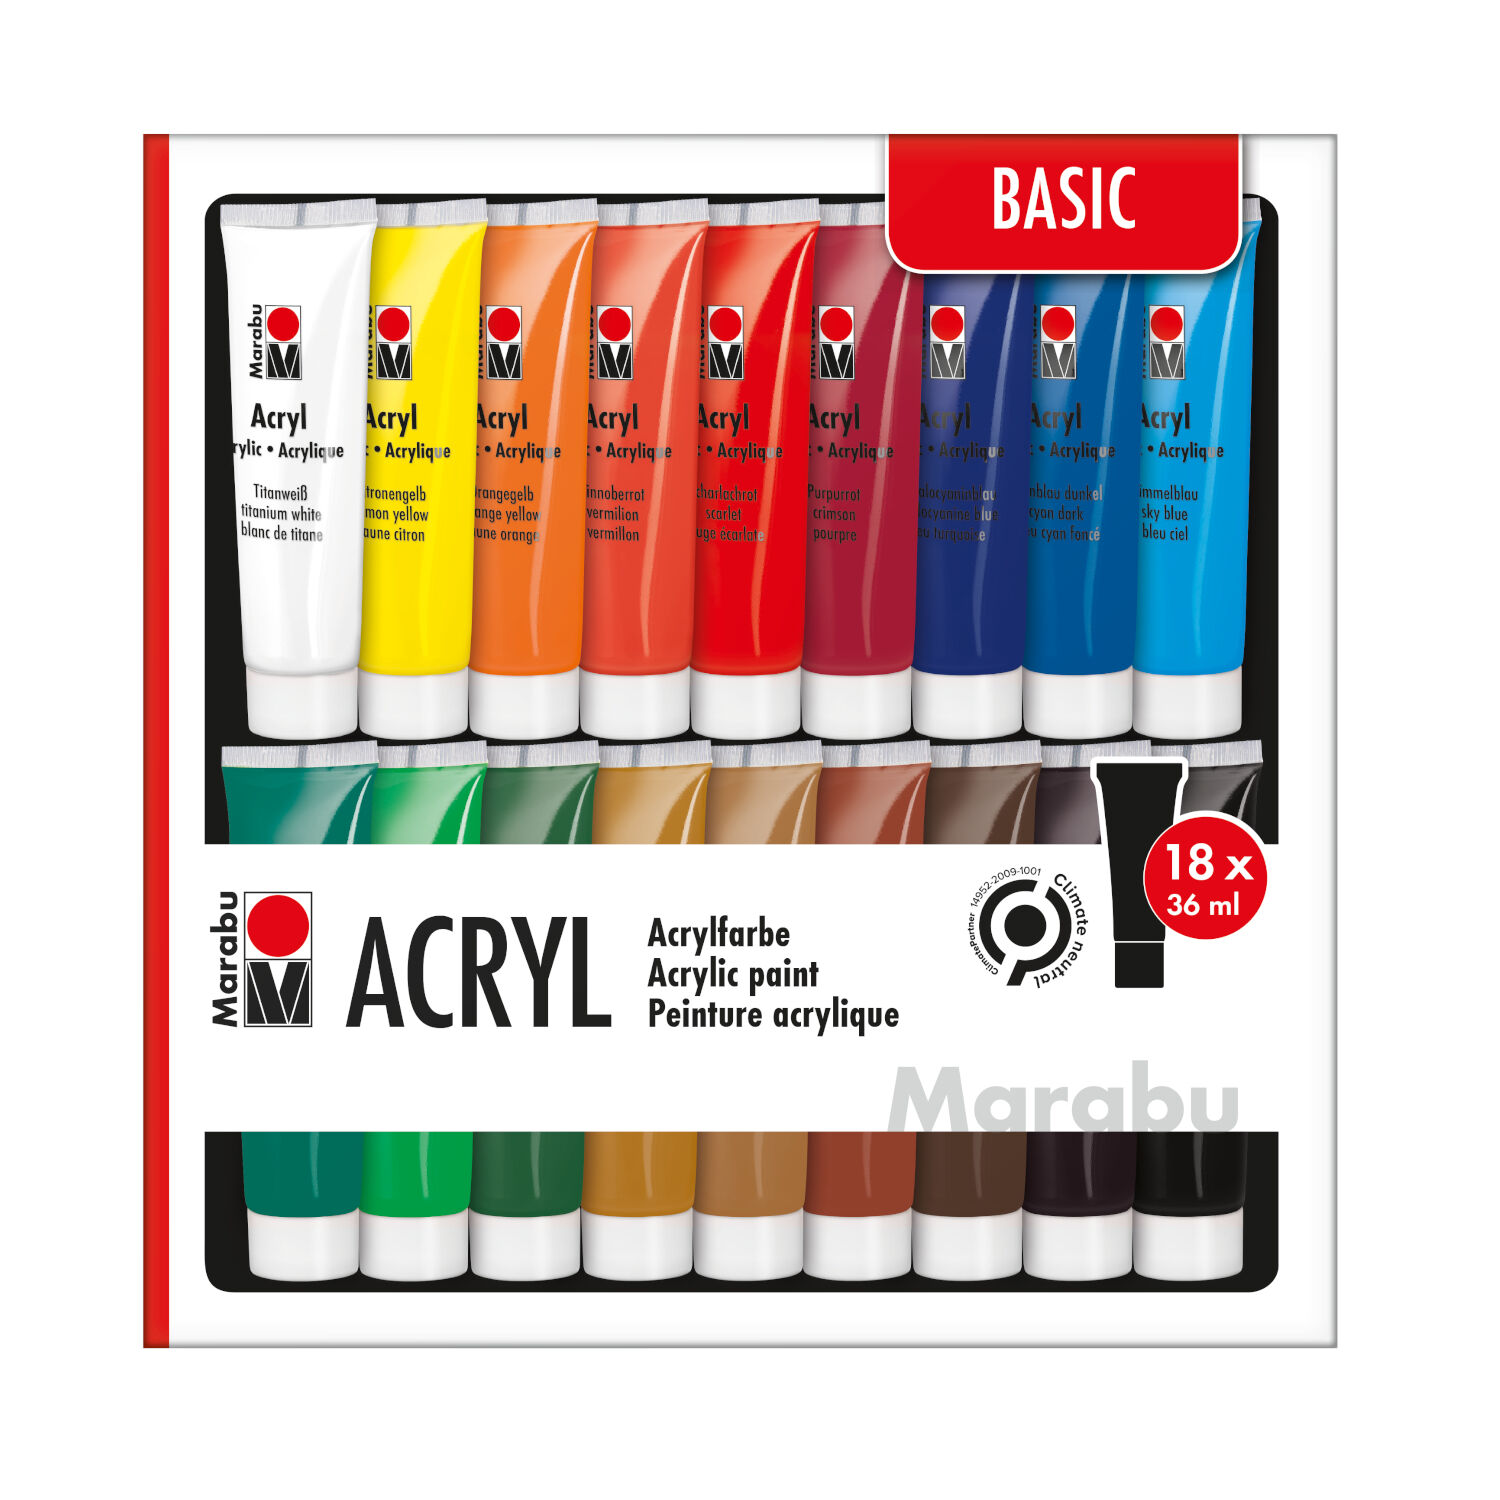 NEU Marabu Acrylfarben-Set BASIC, 18 x 36 ml Tuben